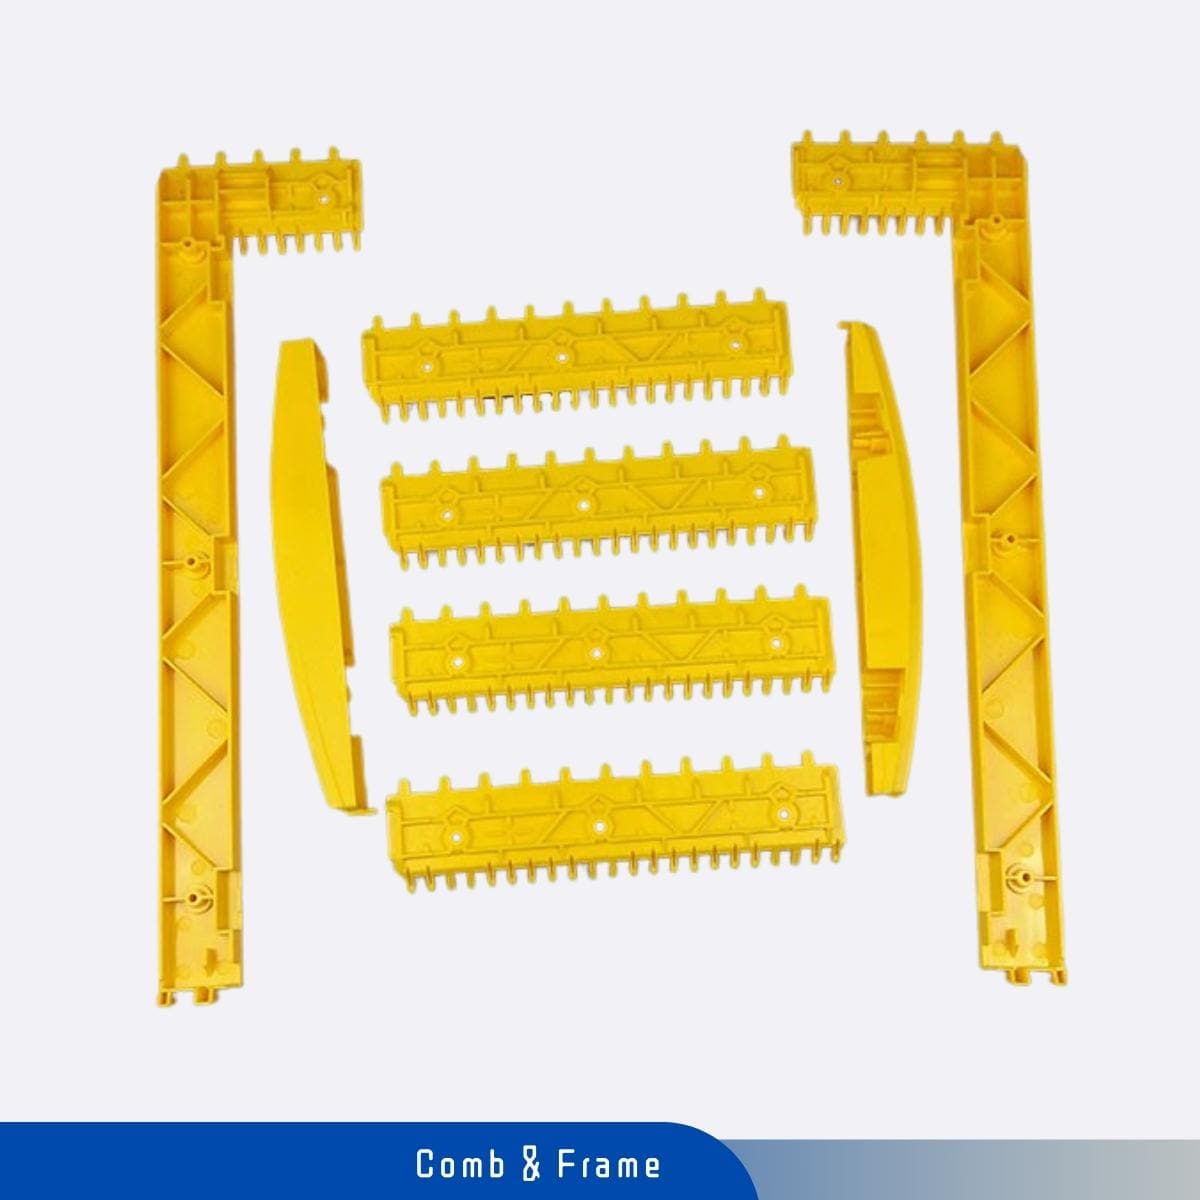 XIZI OTIS Escalator Yellow Frame SCS3199001